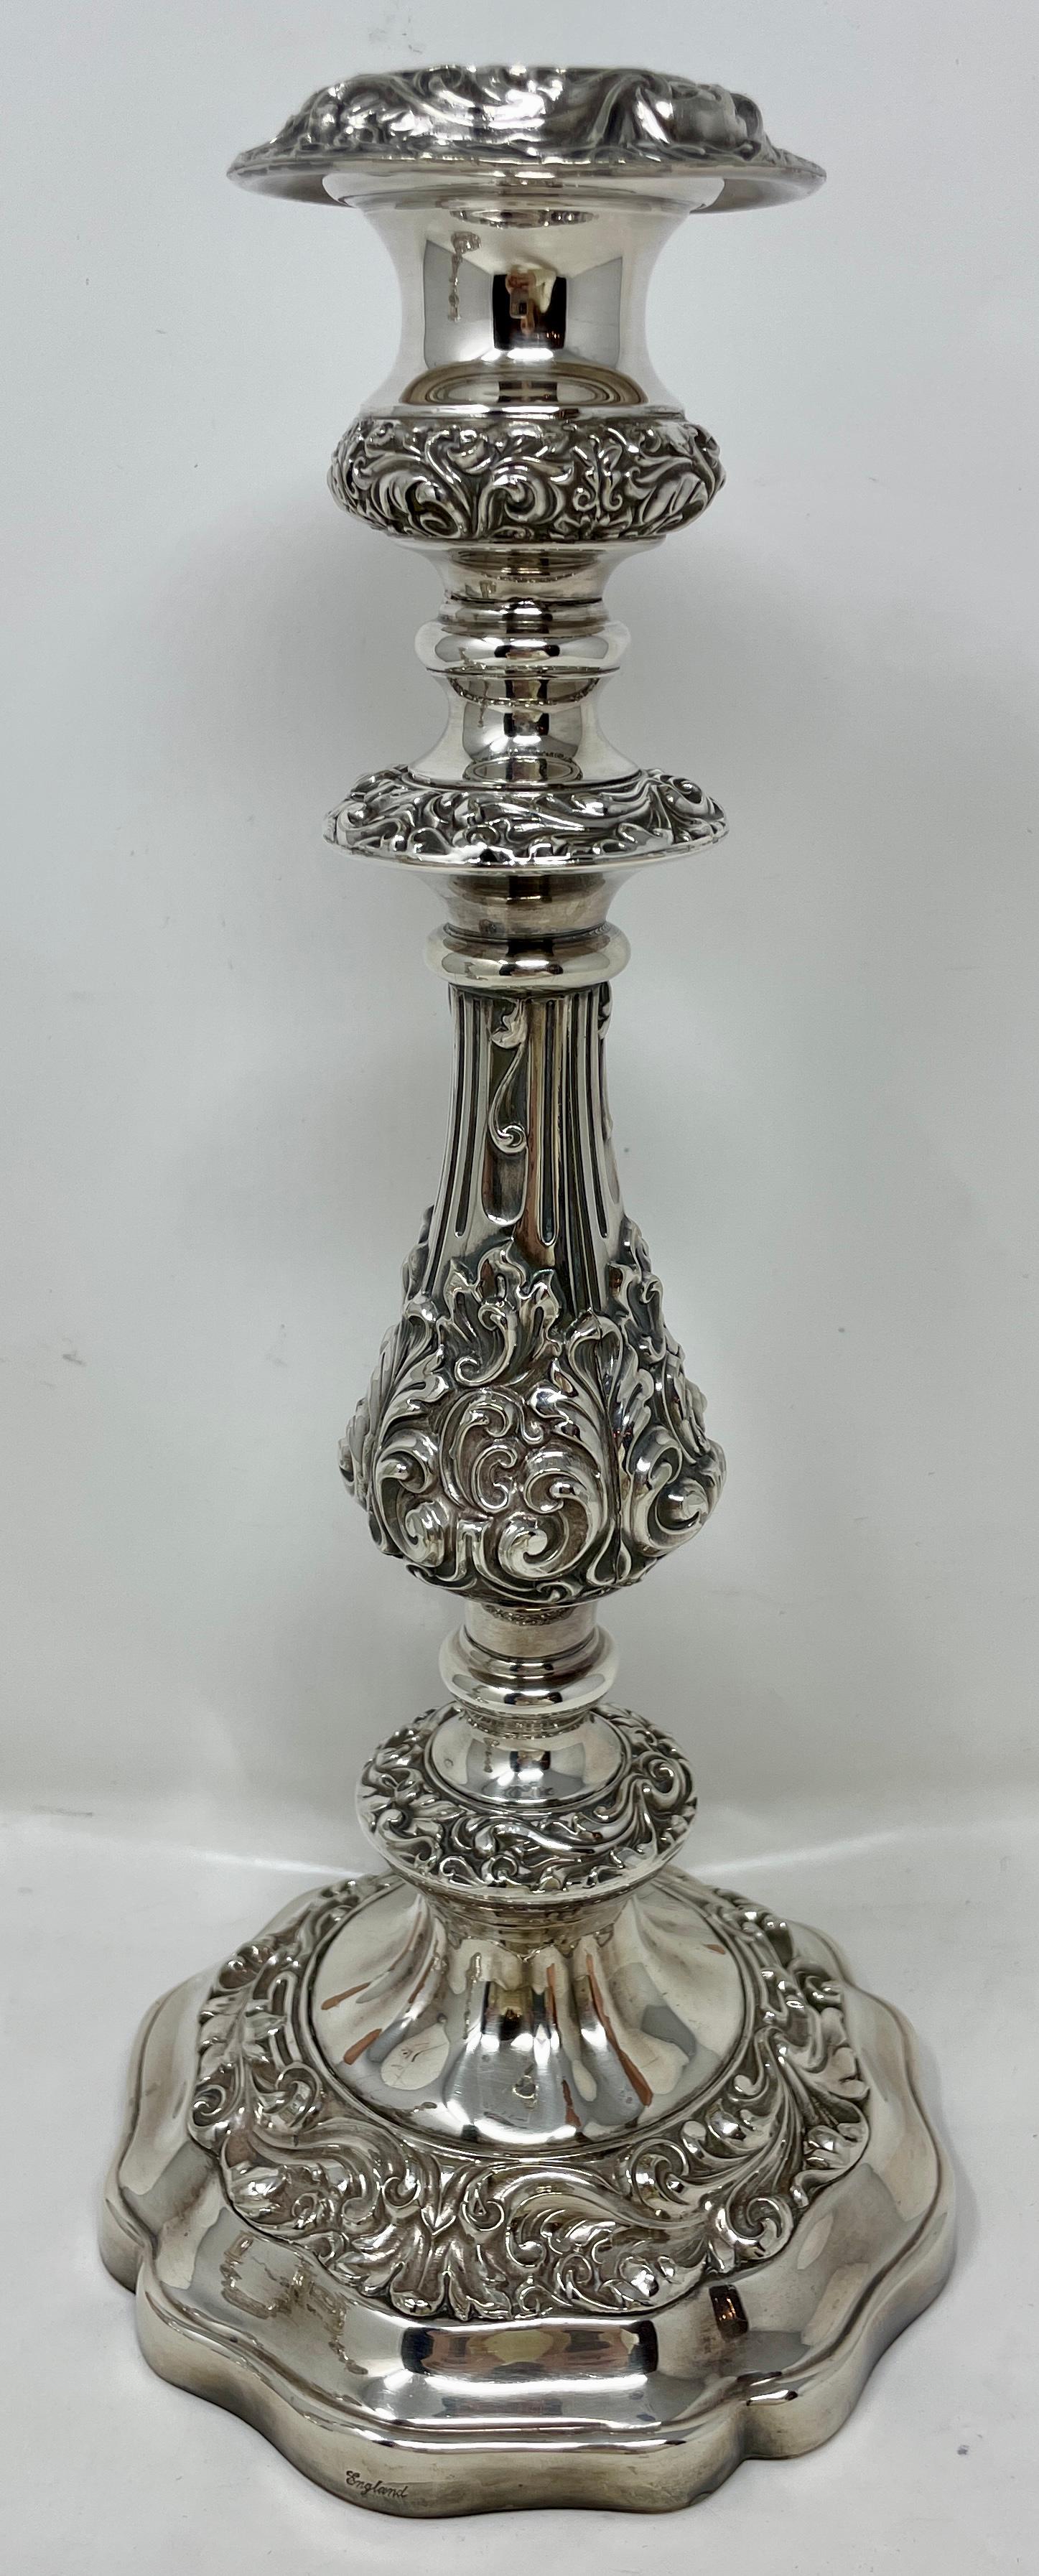 Antique English very fine silver-plated candlesticks, circa 1895-1910.